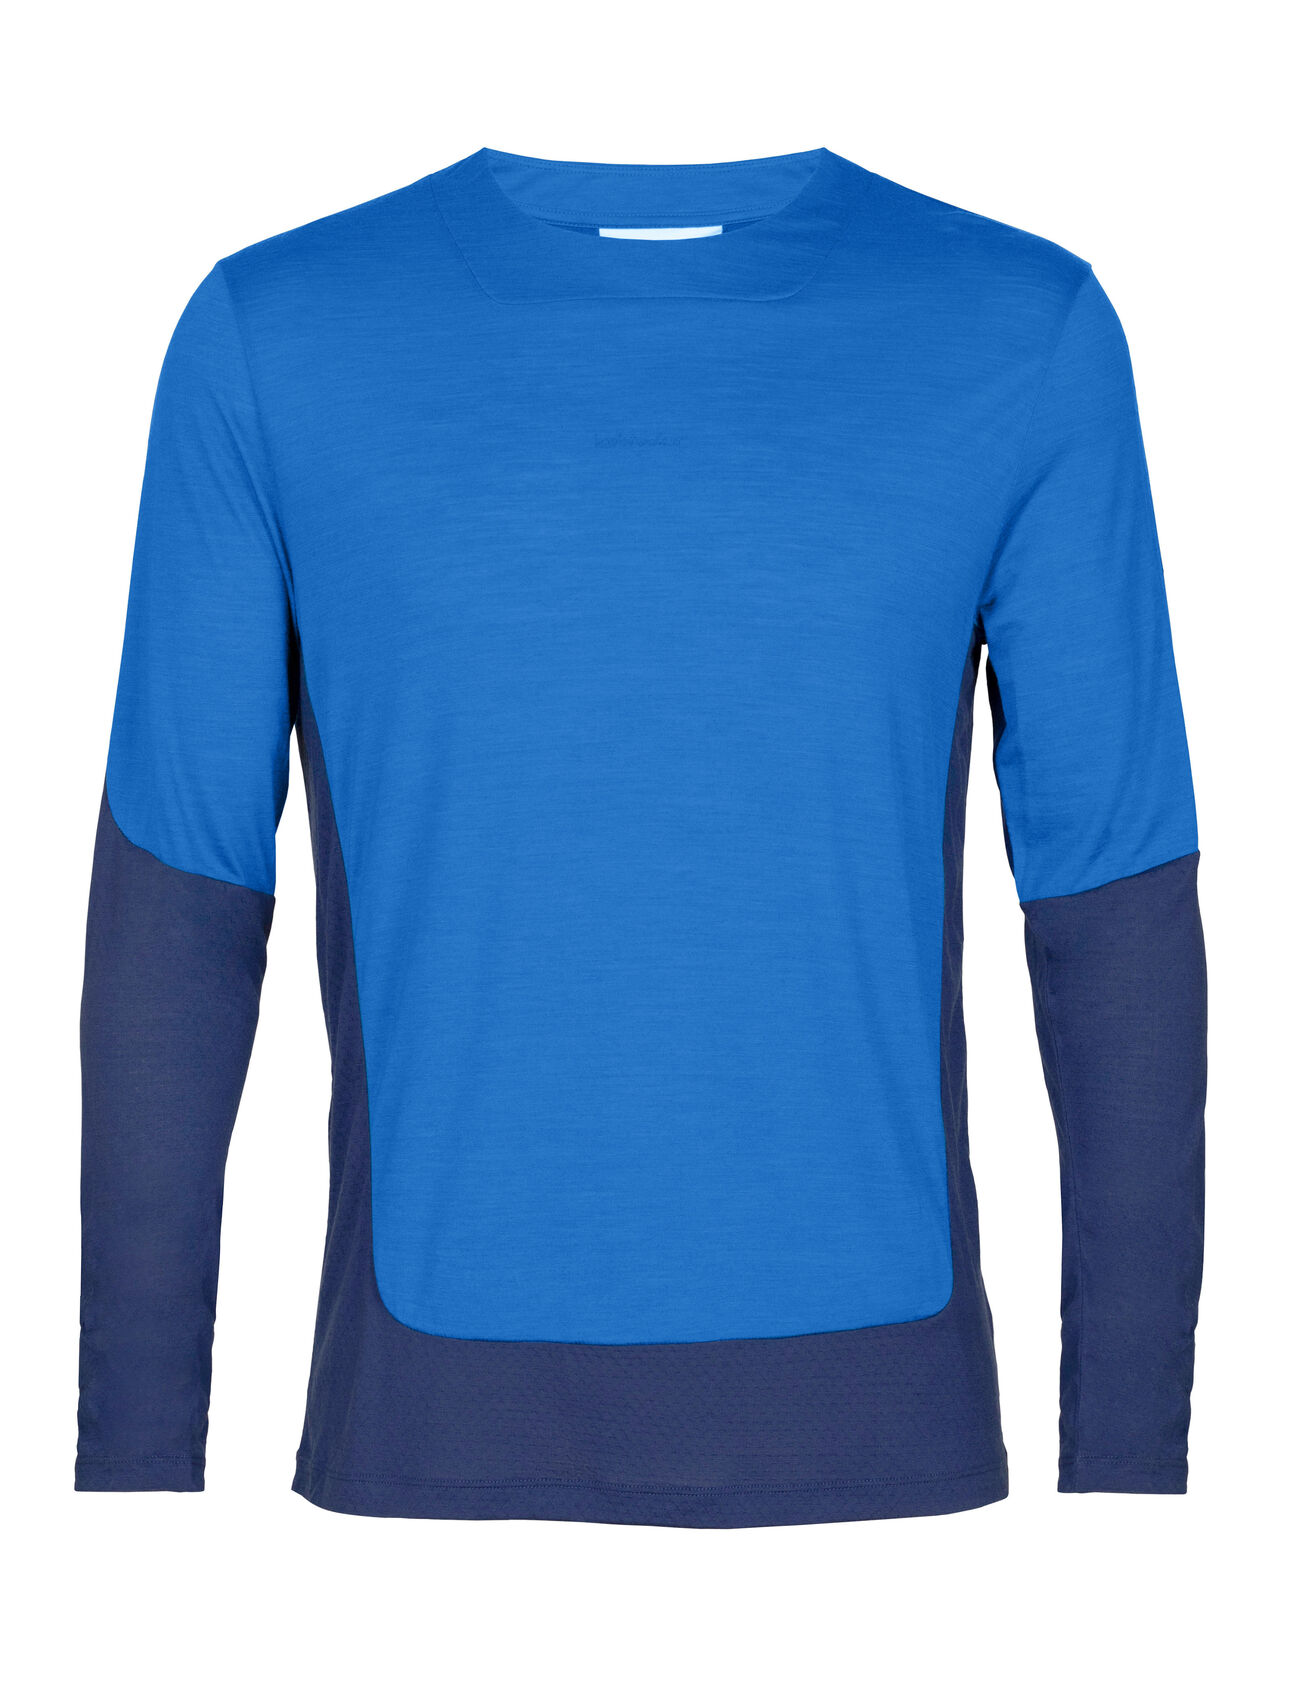 Icebreaker Zoneknit L/S Tee - Sport shirt Men's